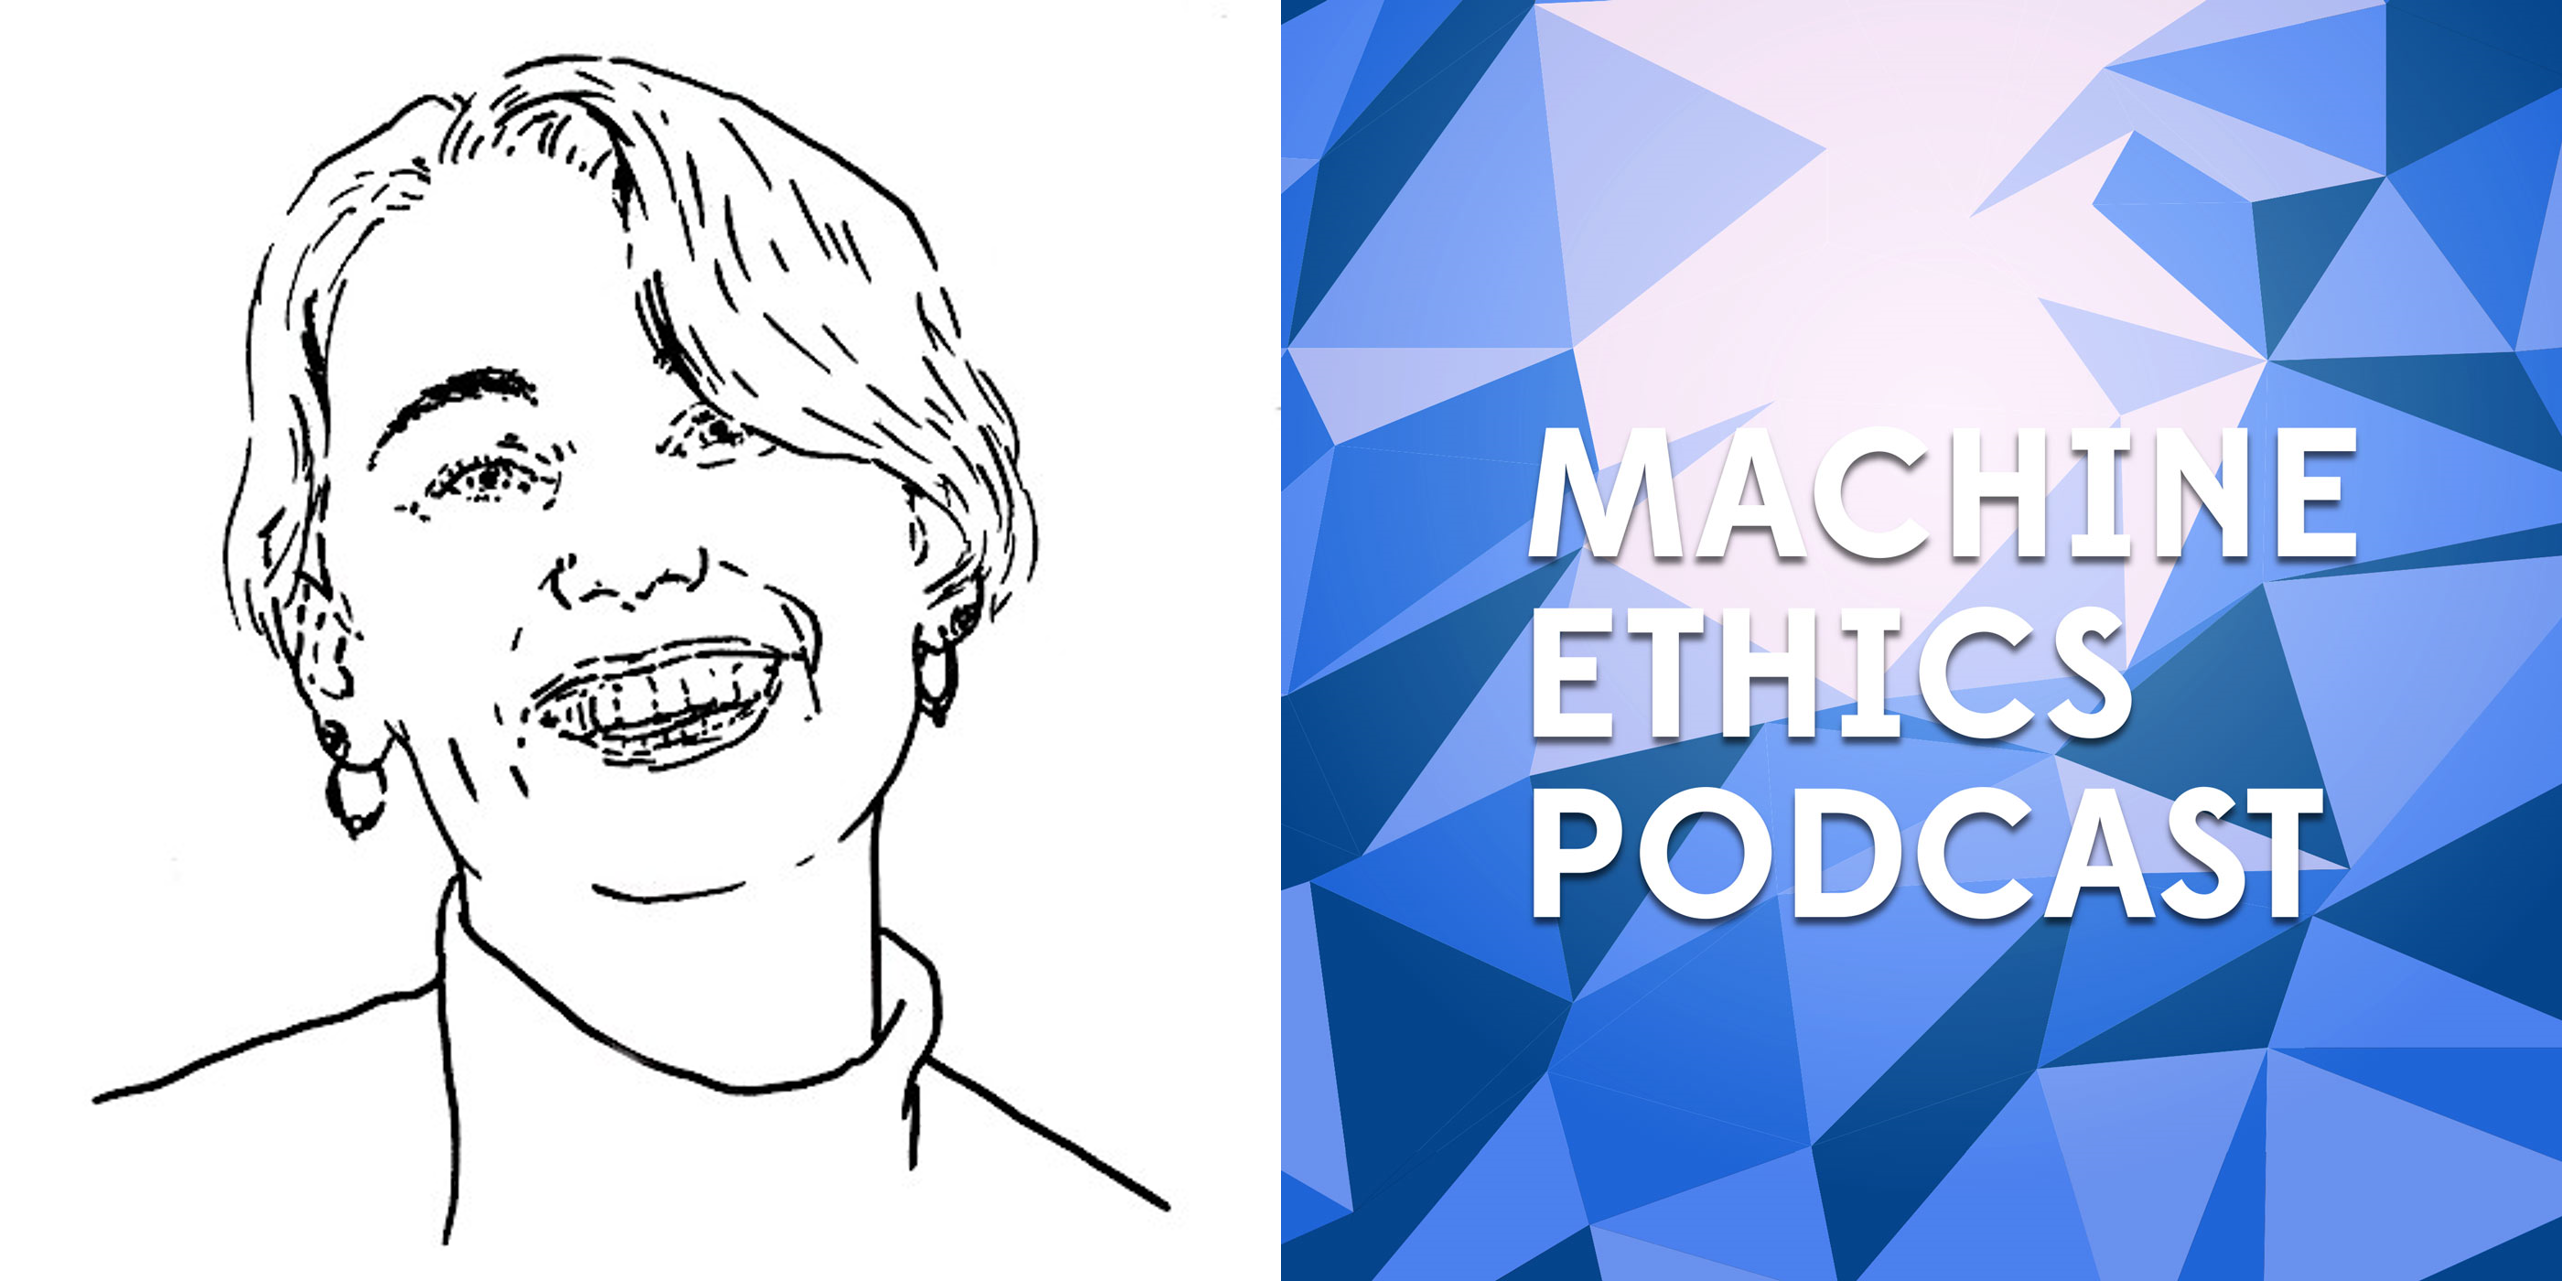 Nadia Piet portrait sketch and machine ethics podcast logo 